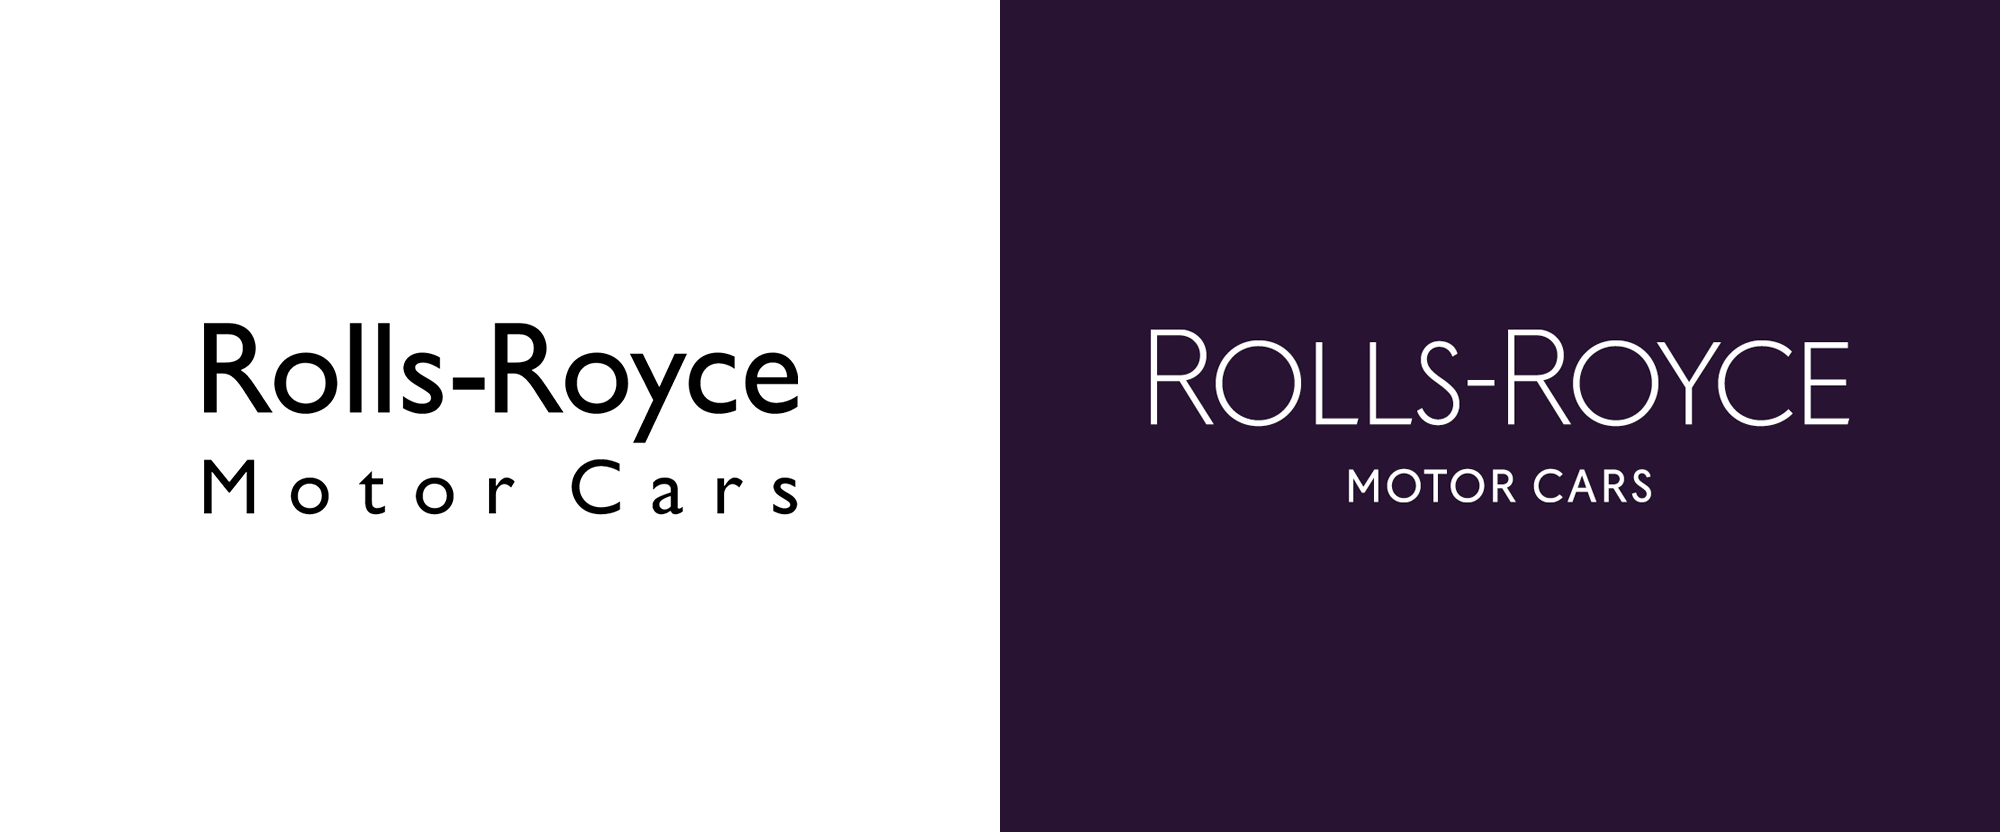 Brand New New Logo and Identity for RollsRoyce by Pentagram